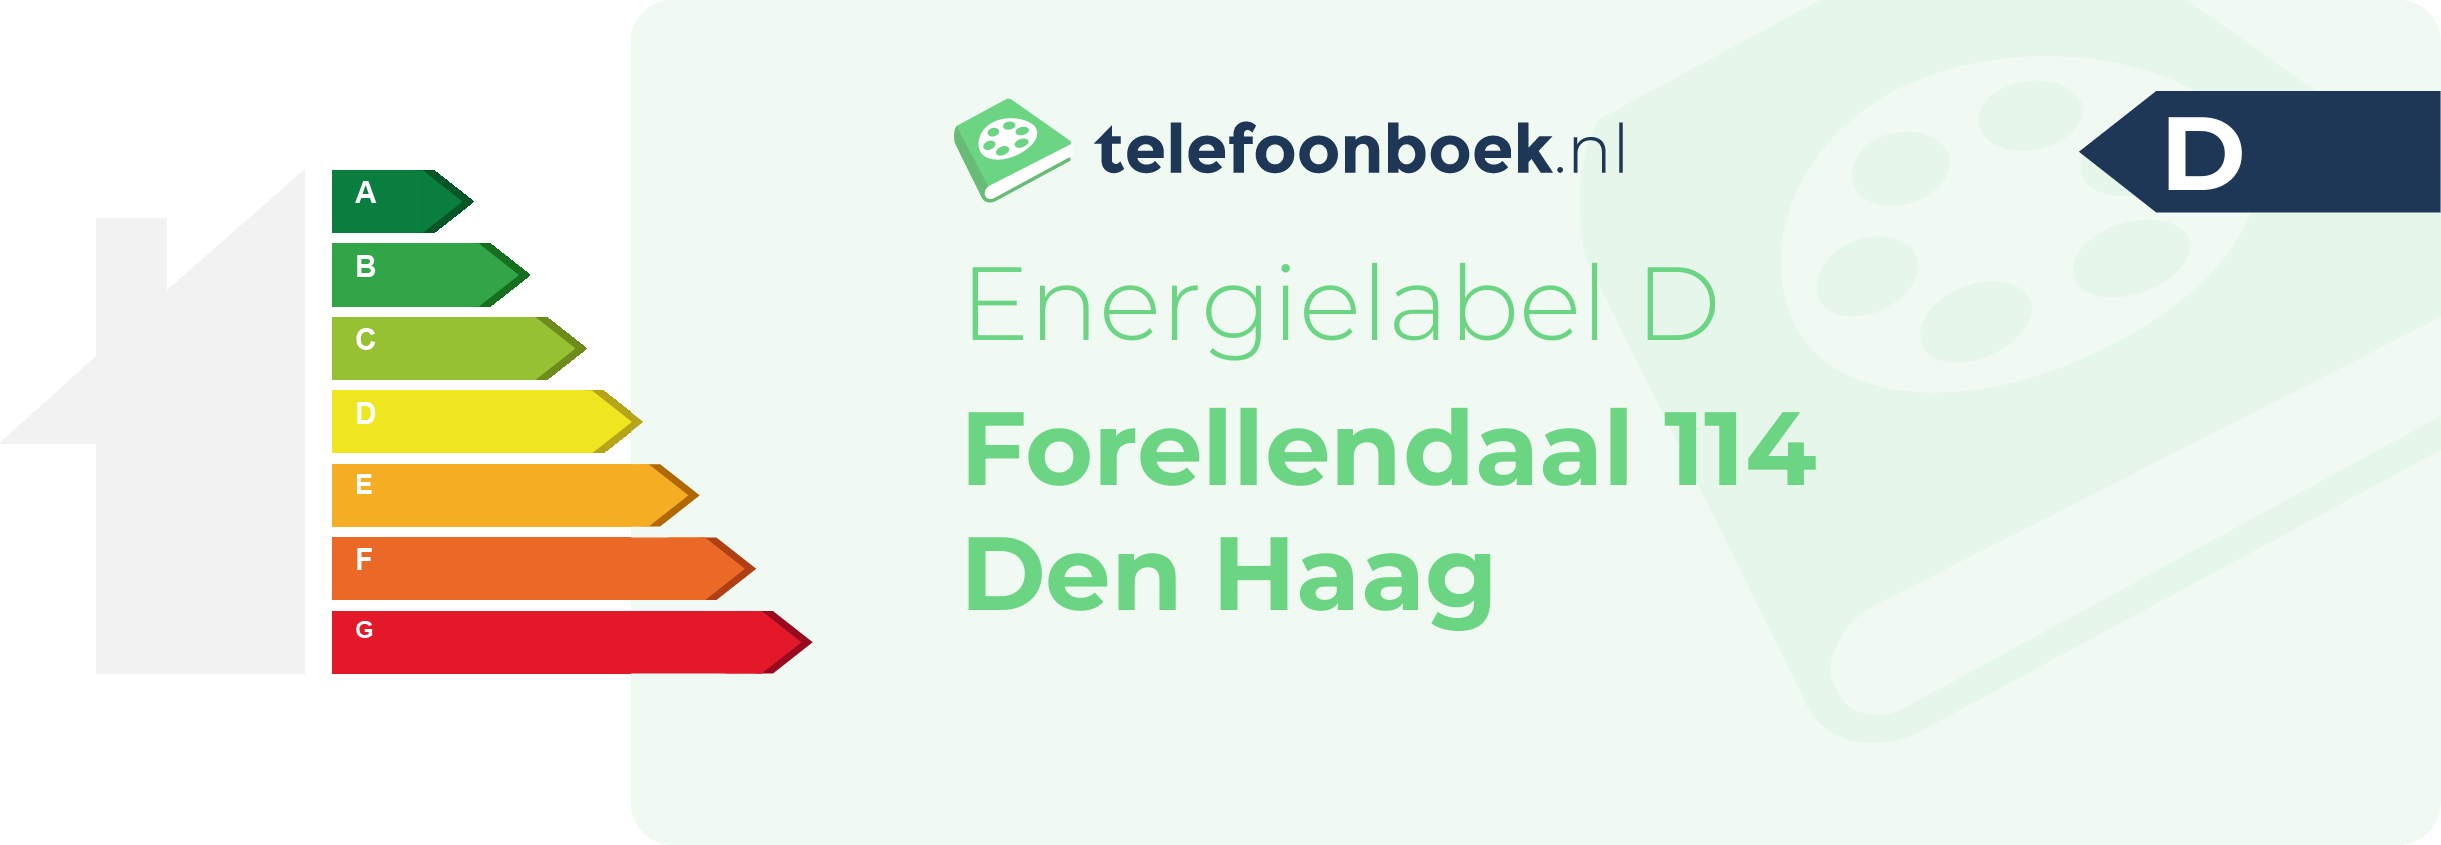 Energielabel Forellendaal 114 Den Haag